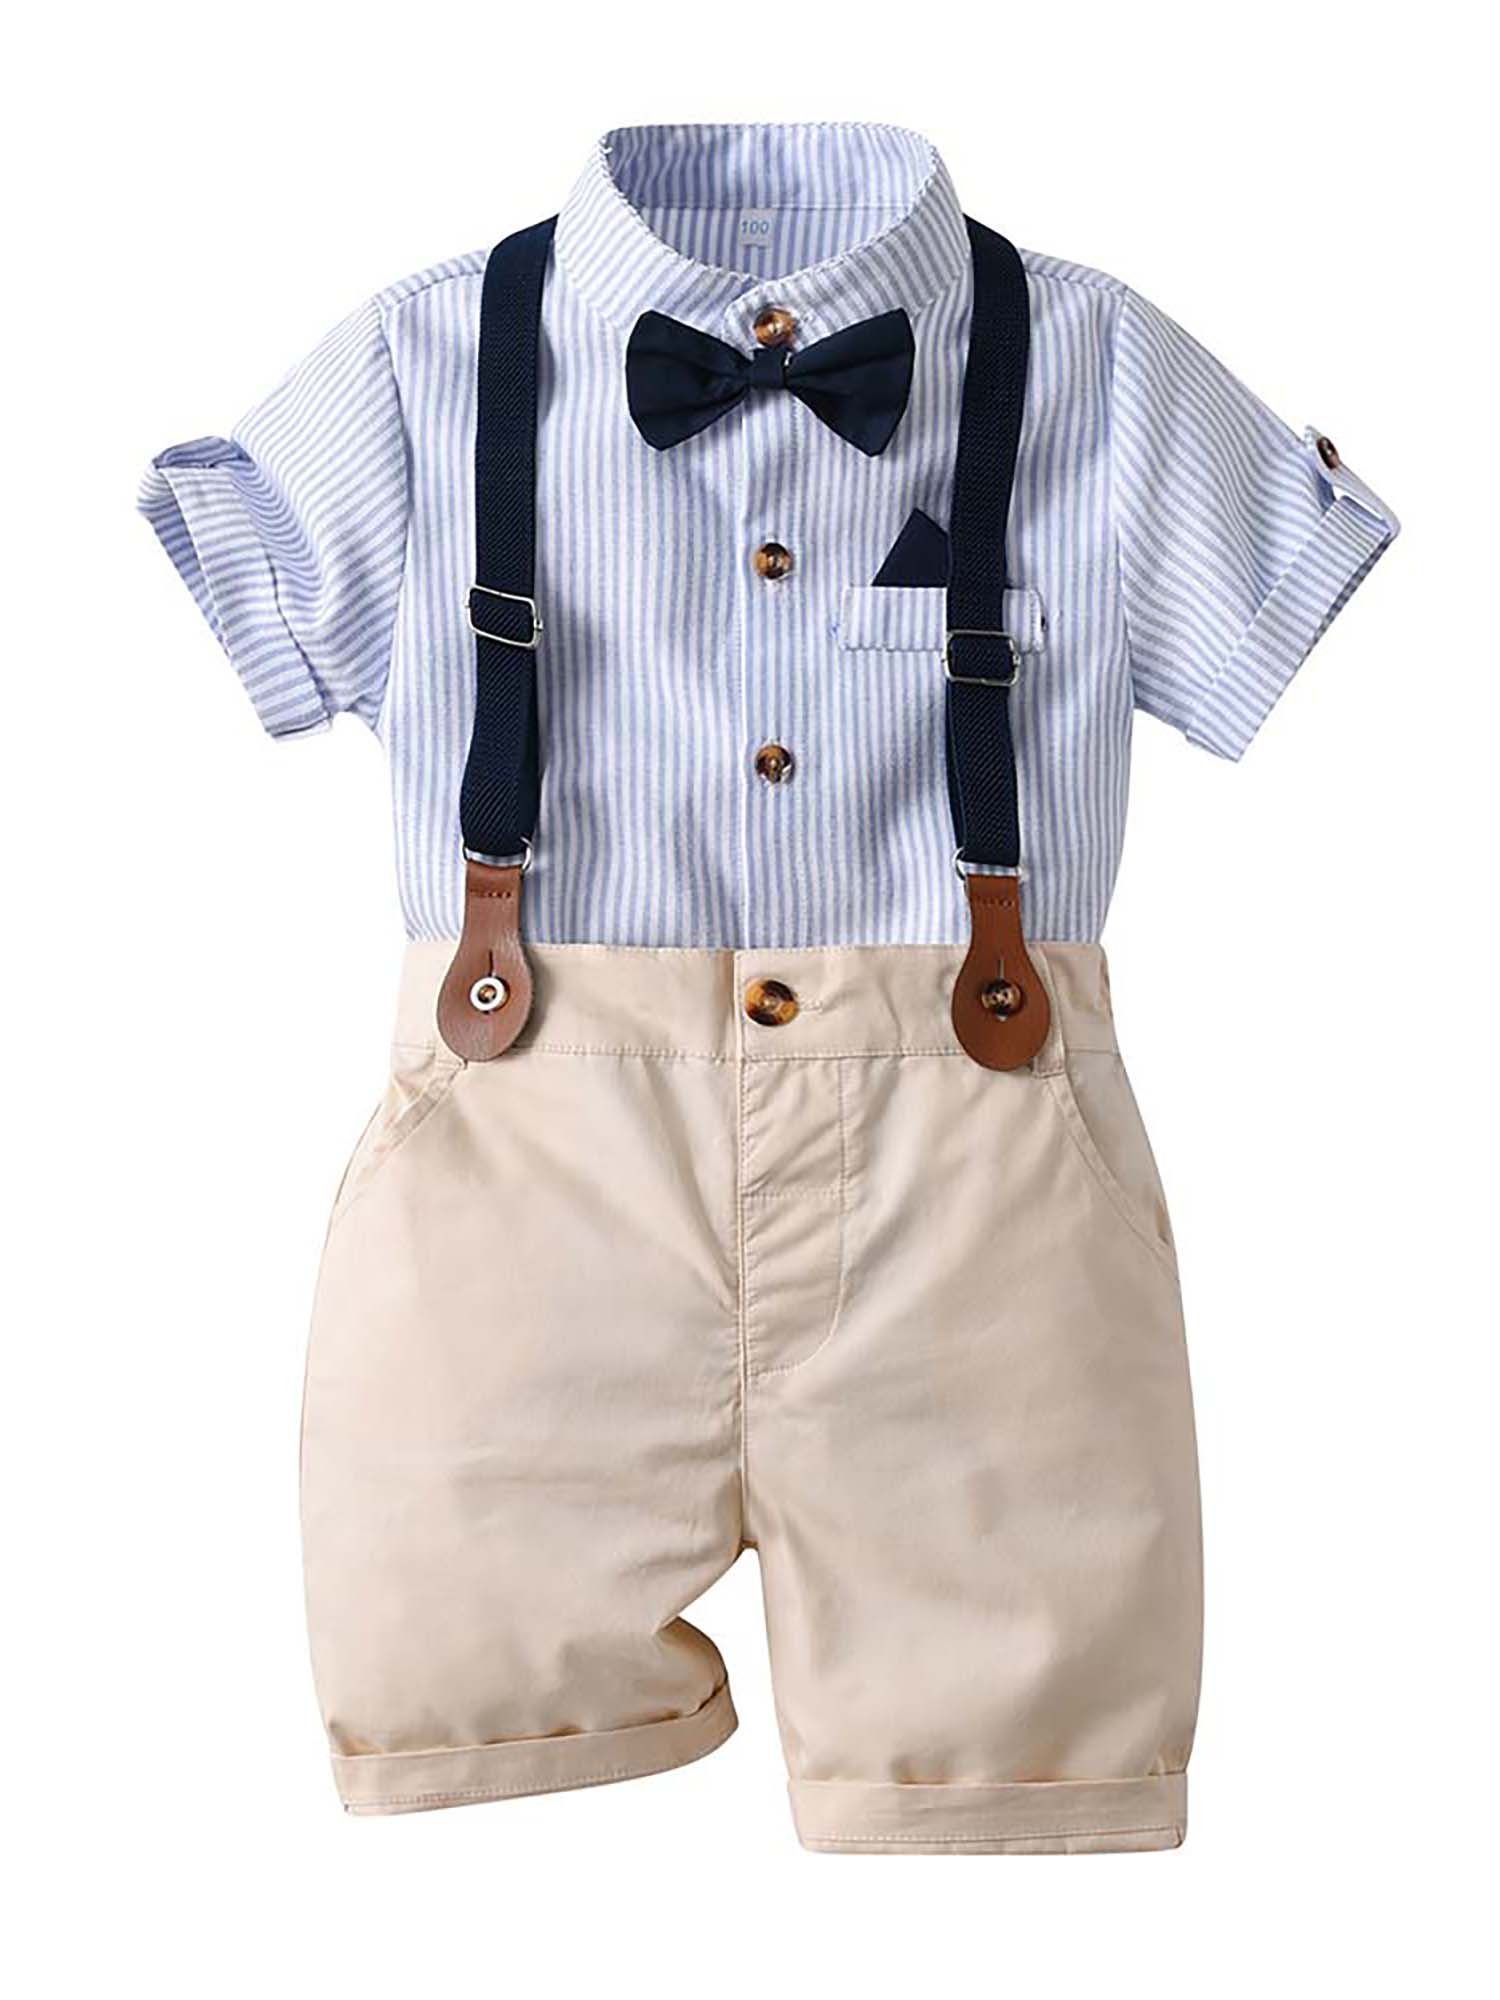 Lapastyle Shirt & Shorts Gestreifter Modeanzug für Jungen mit kurzen Ärmeln